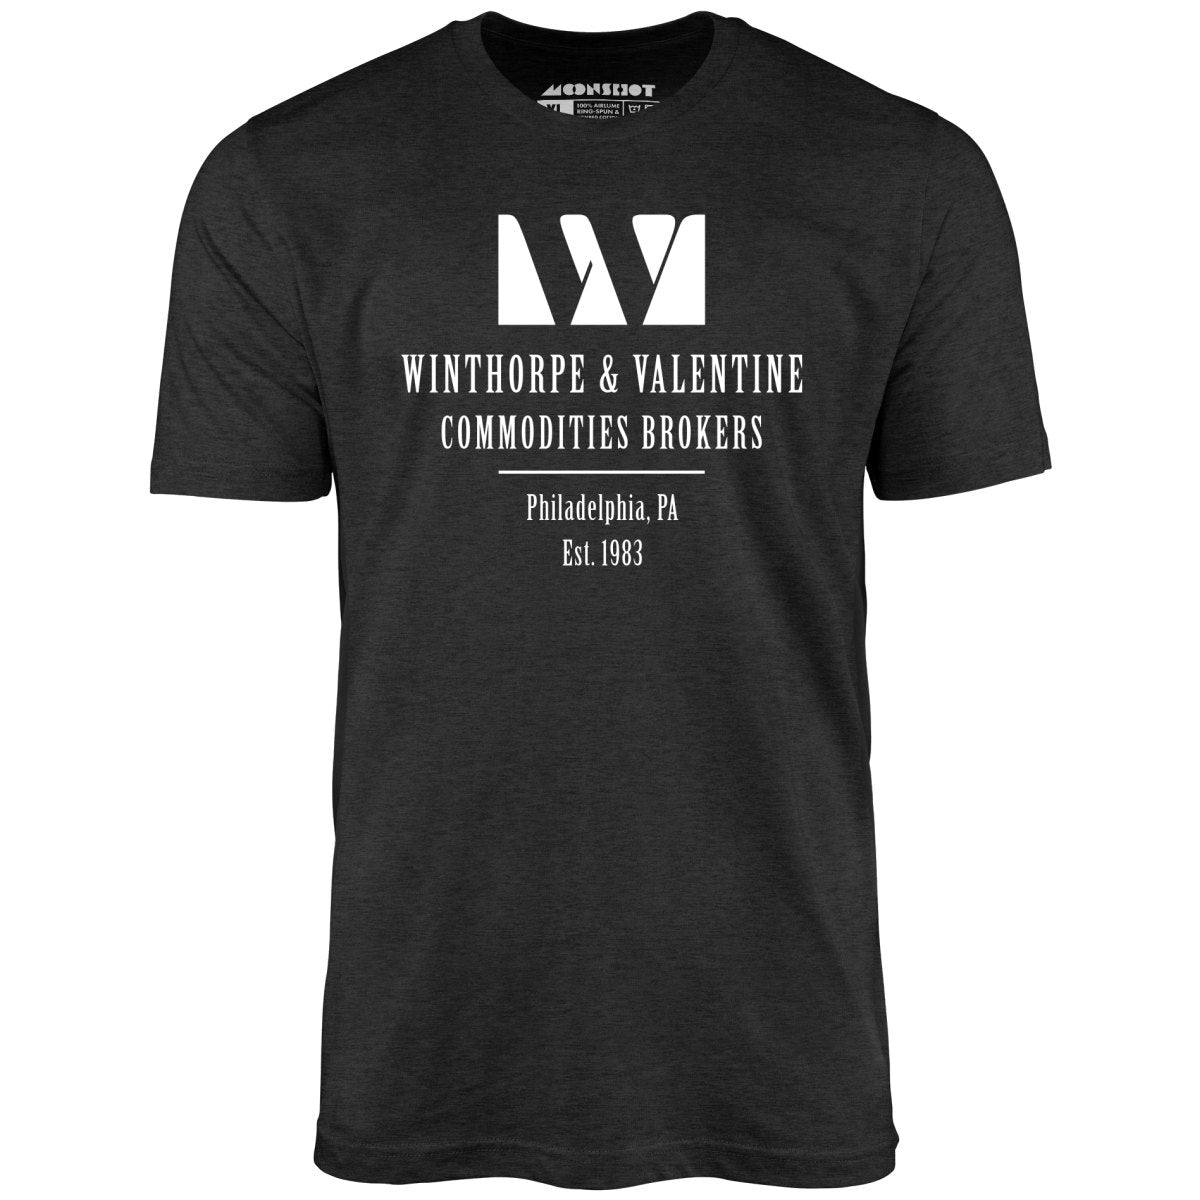 Winthorpe & Valentine Commodities Brokers - Unisex T-Shirt